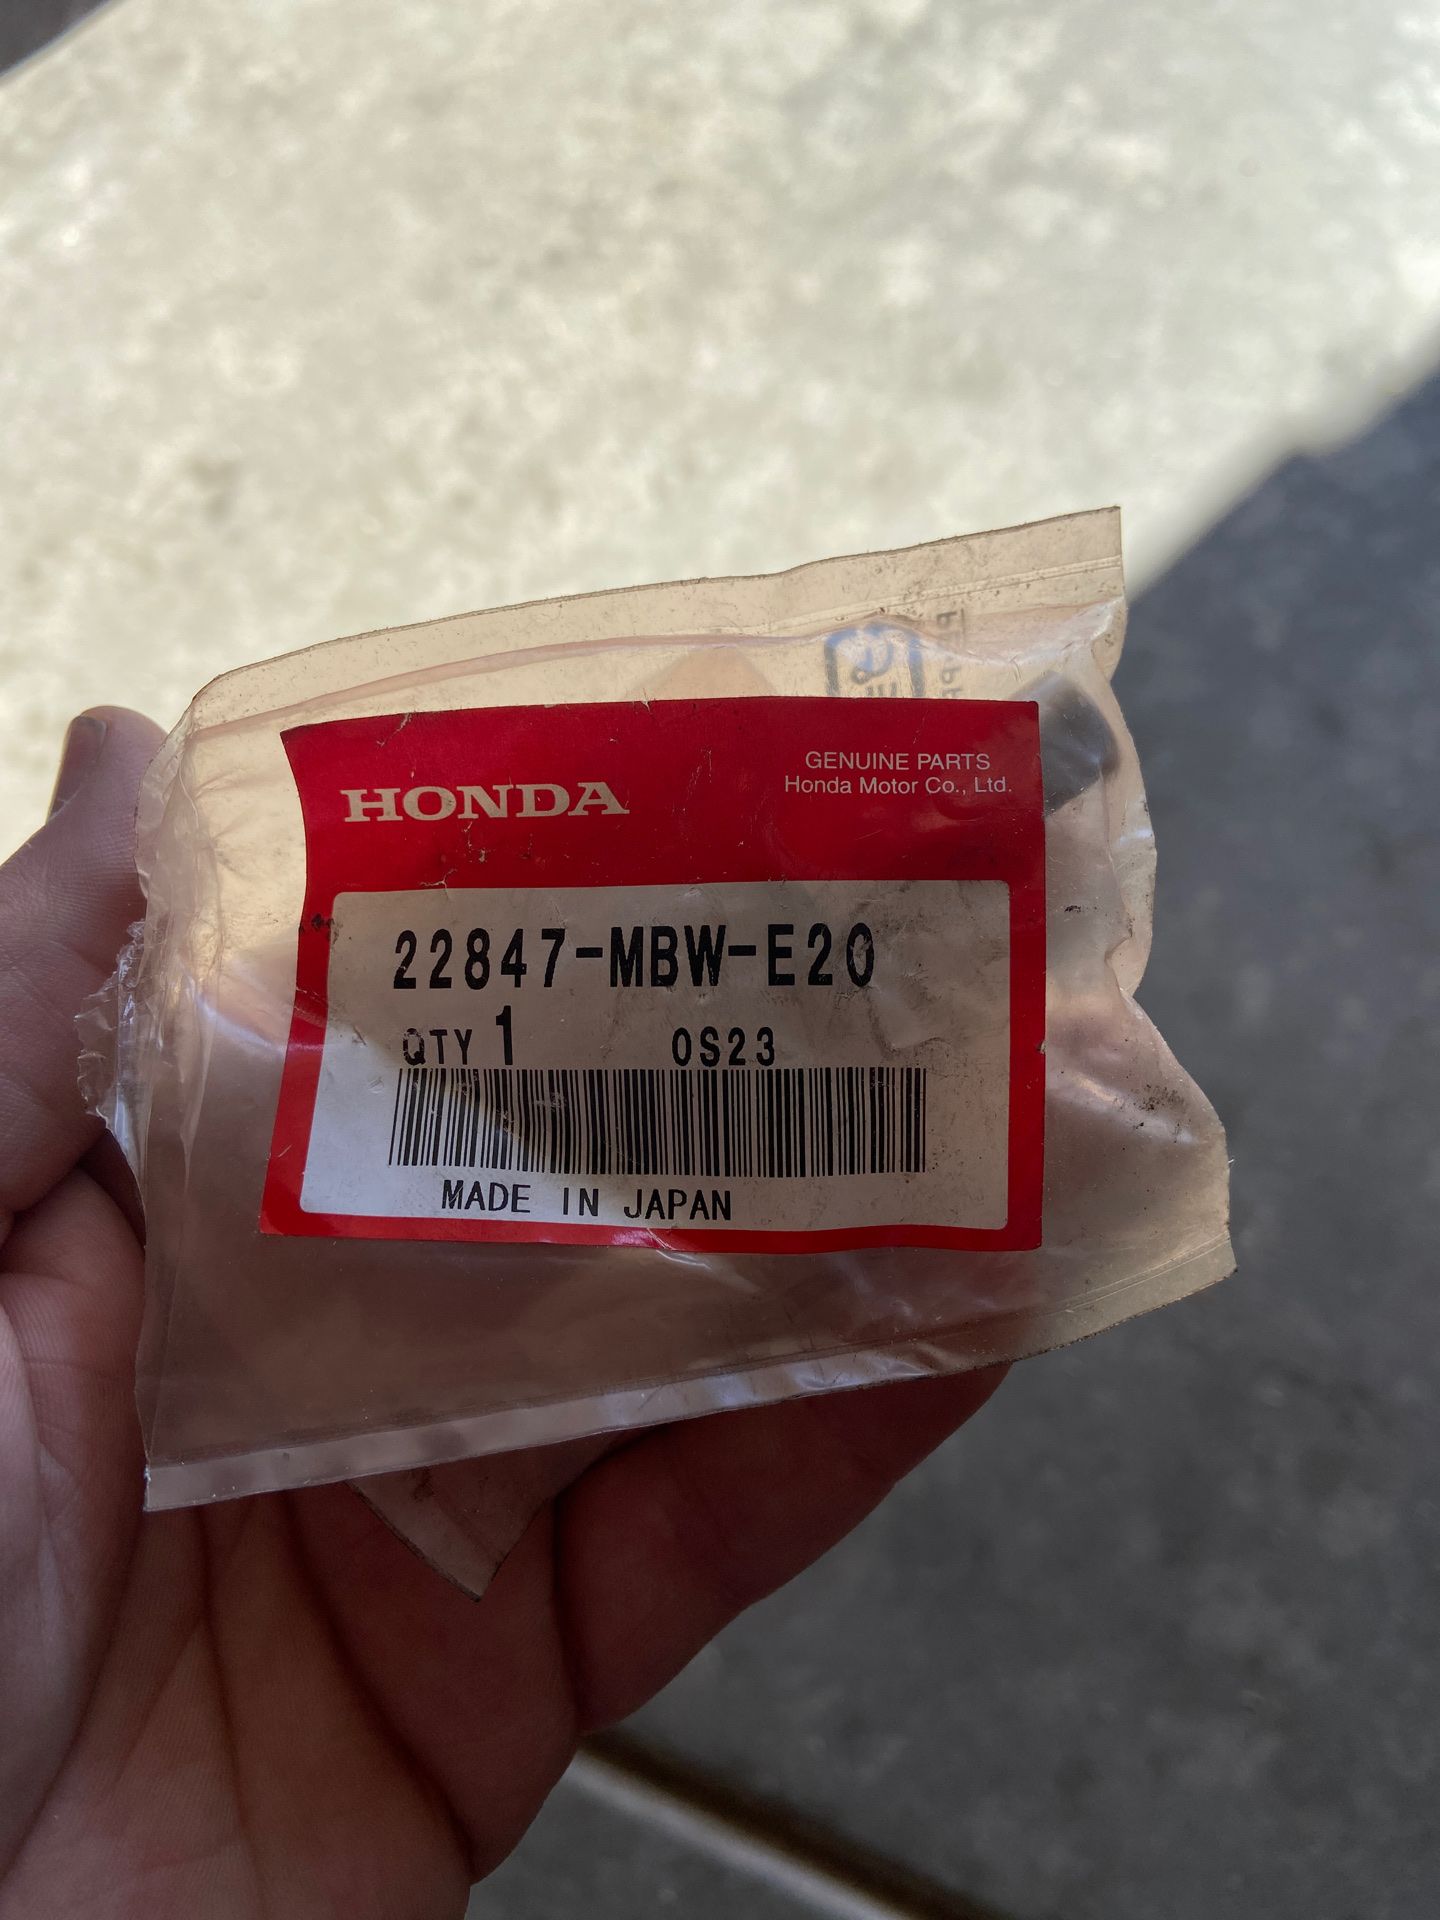 Honda motorcycle clutch pin lifter